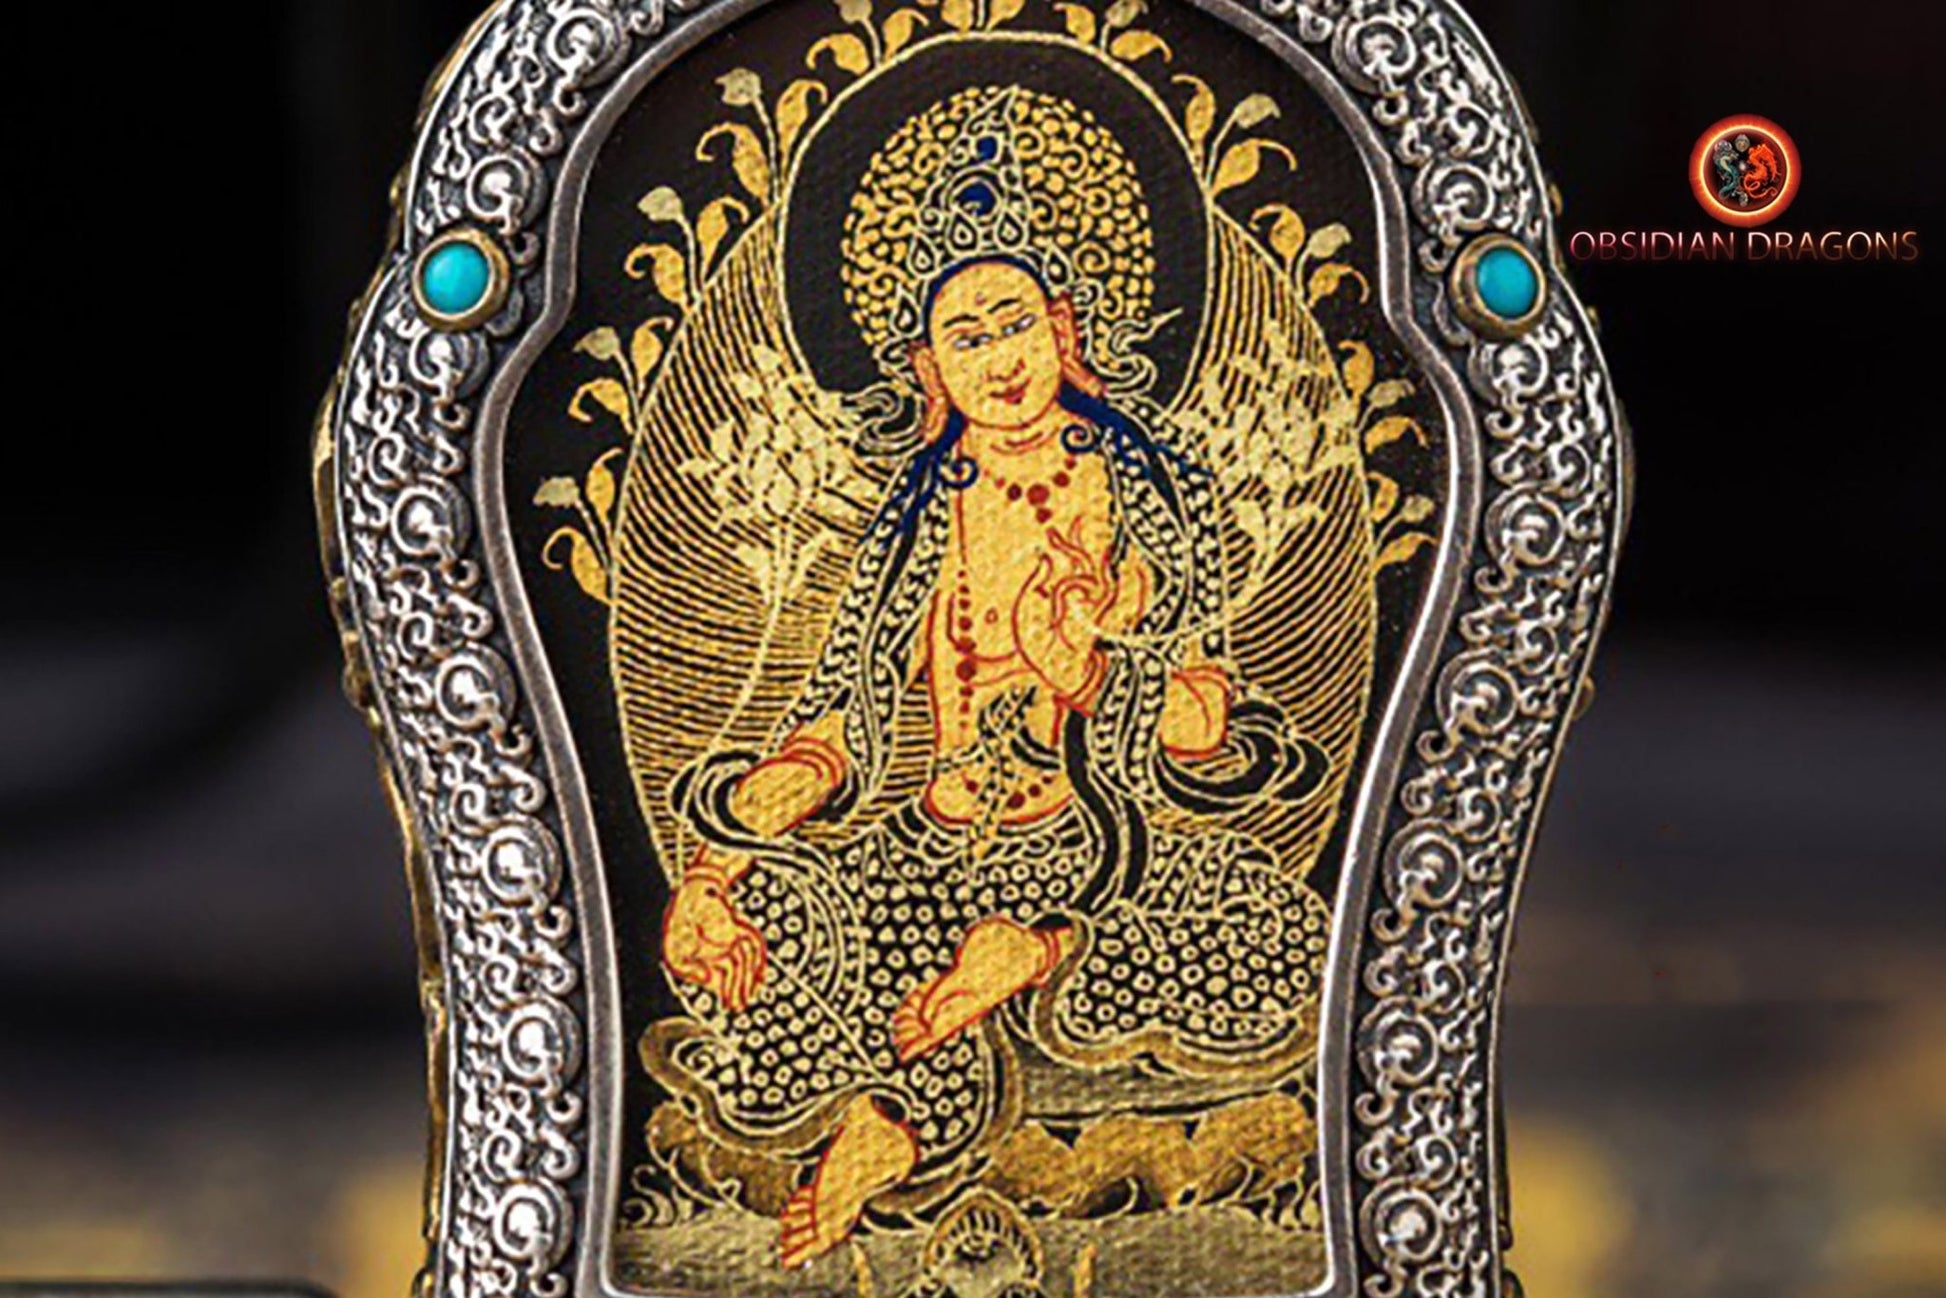 Pendentif Bouddha. Tara verte. Ghau, amulette de protection tibétaine. Véritable tangka artisanal - obsidian dragon